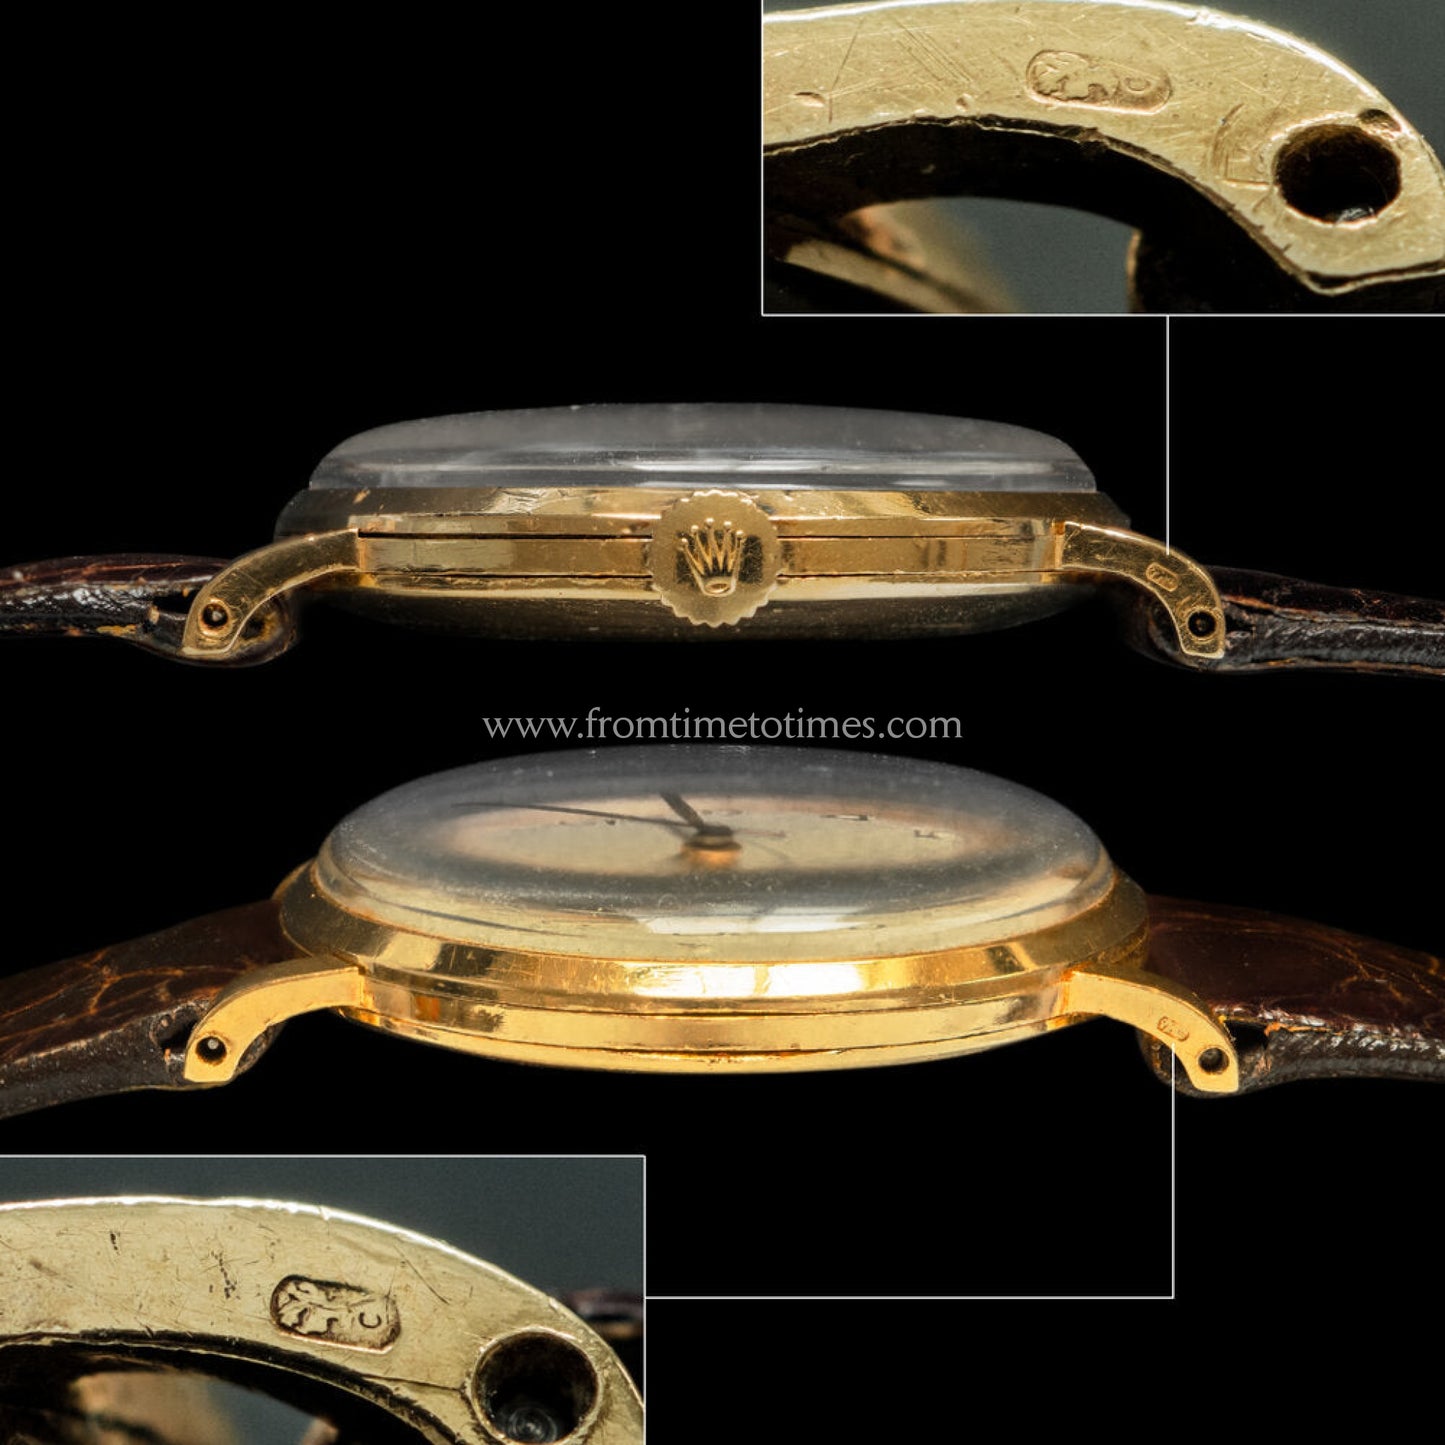 No. 307 / Rolex Precision - 1966 Watches